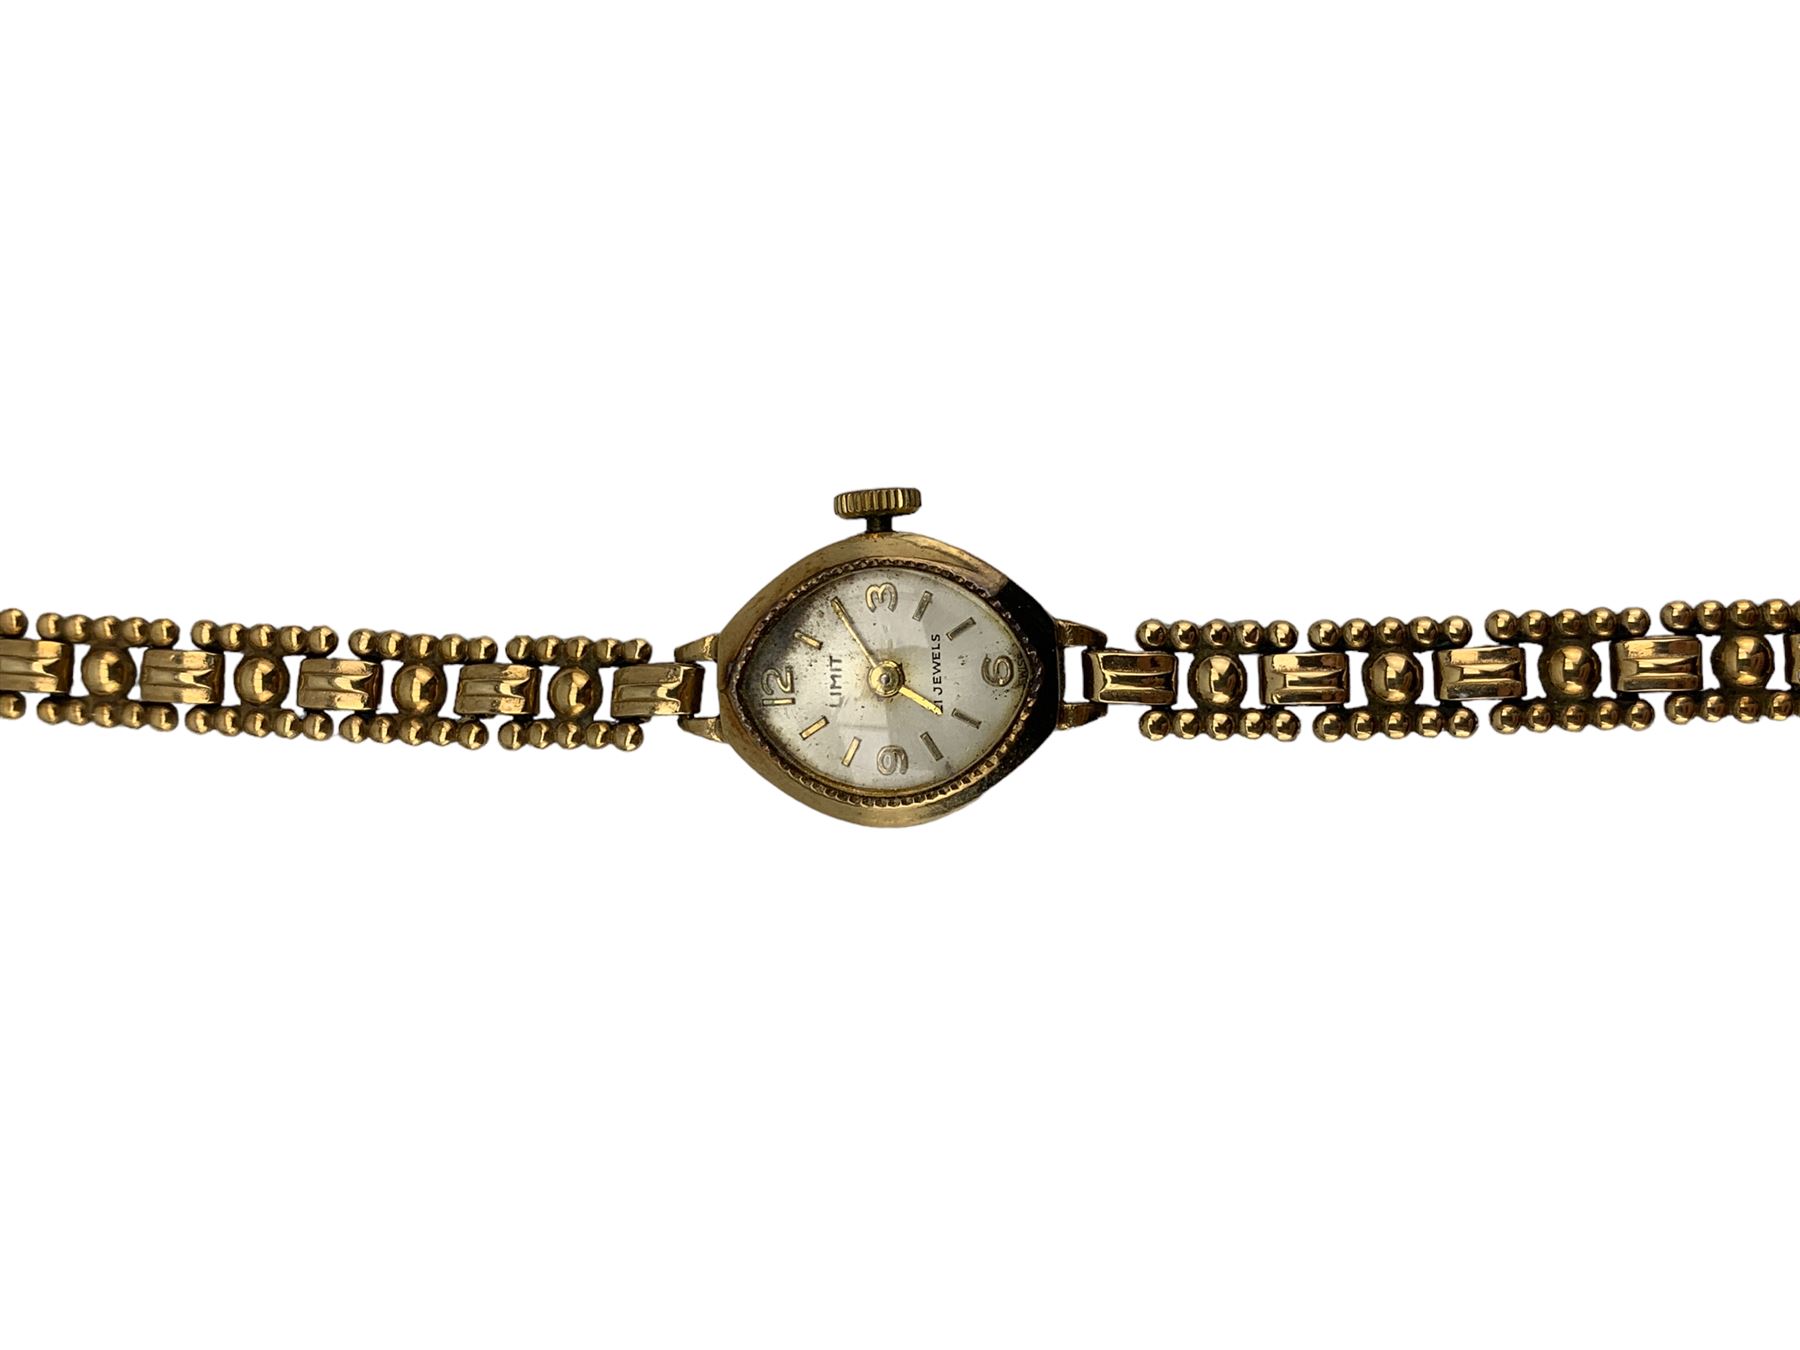 Limit ladies 9ct gold manual wind wristwatch - Image 2 of 3